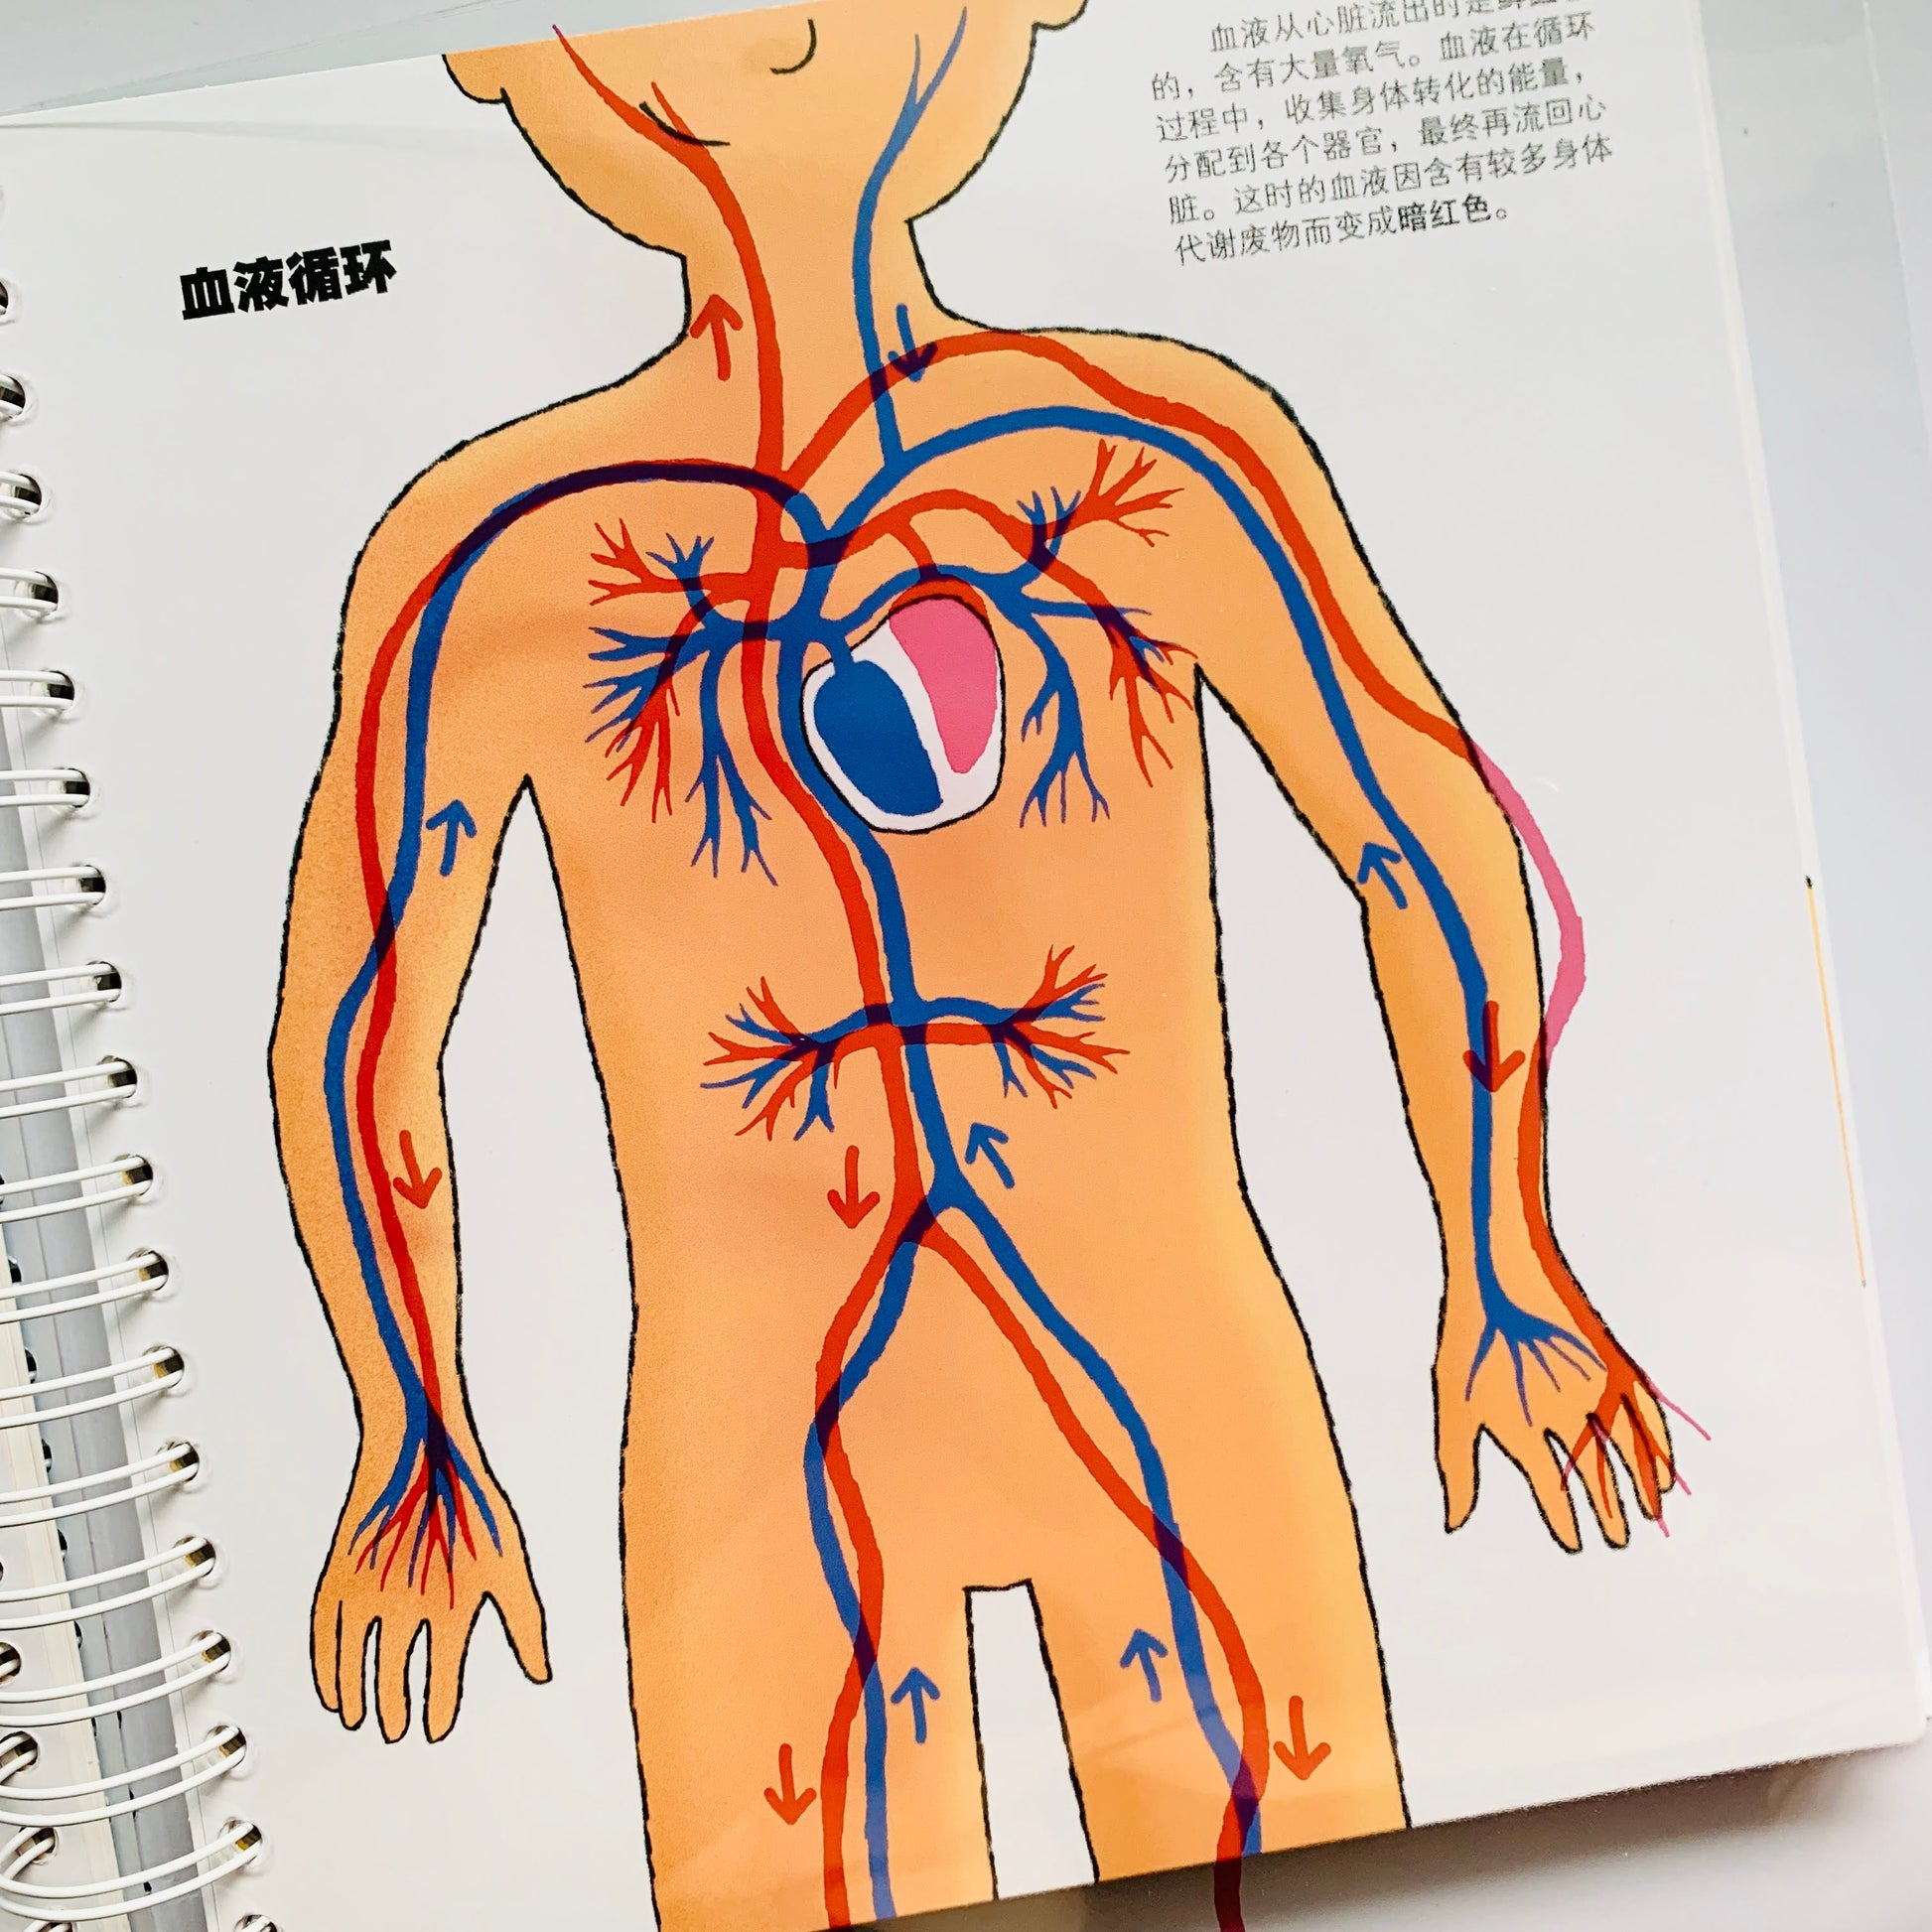 我们的身体 Our Bodies Interactive Book